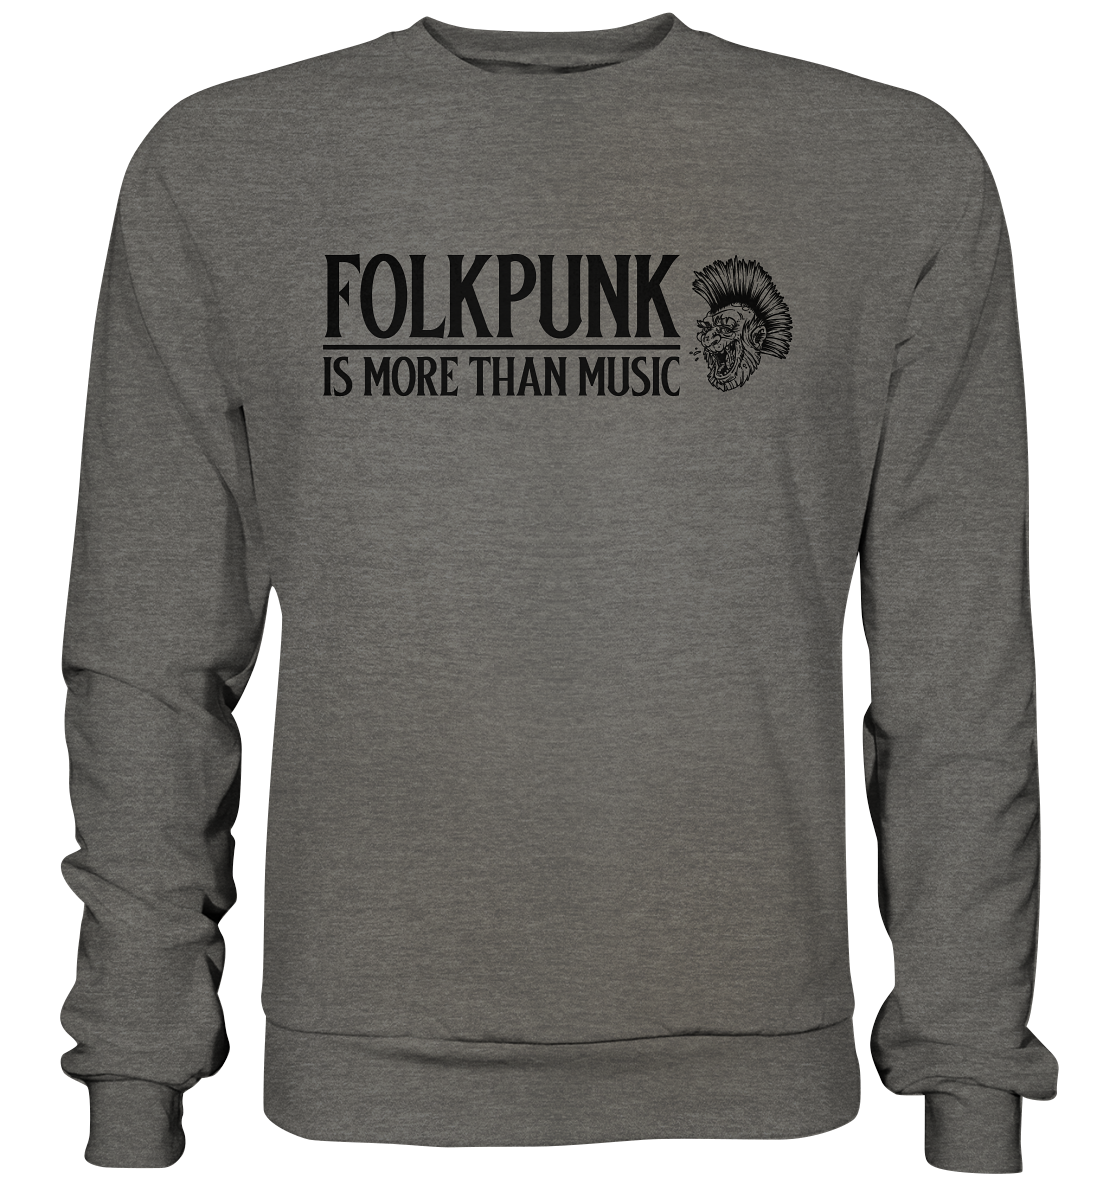 Folkpunk "Is More Than Music" - Basic Sweatshirt